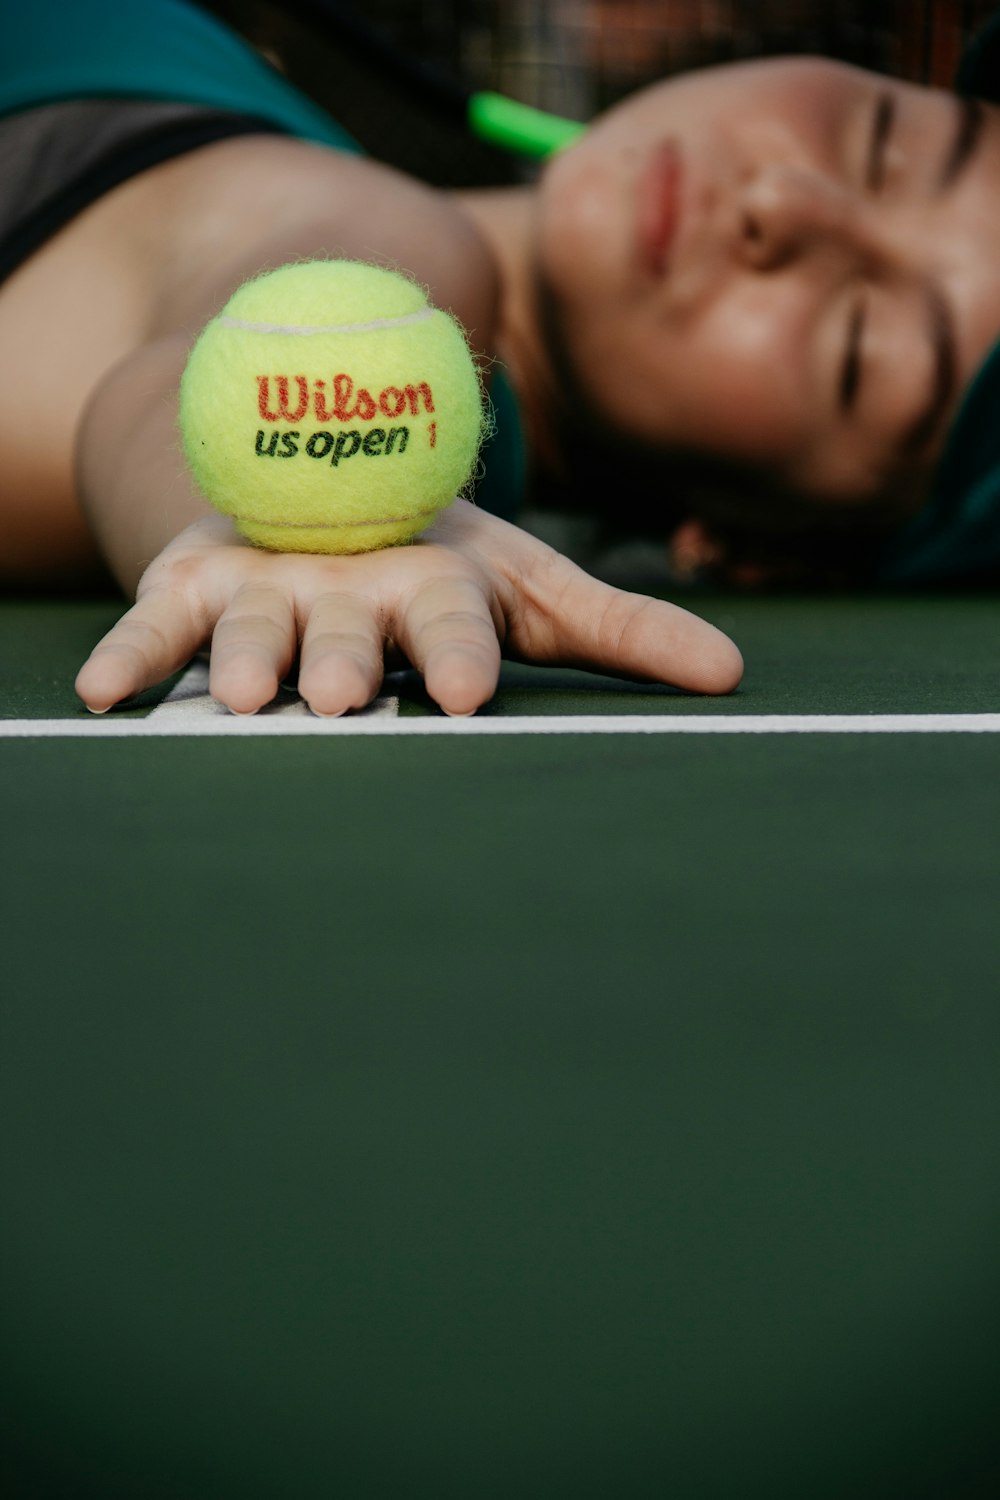 woman lying on tennis court holding green Wilson ball